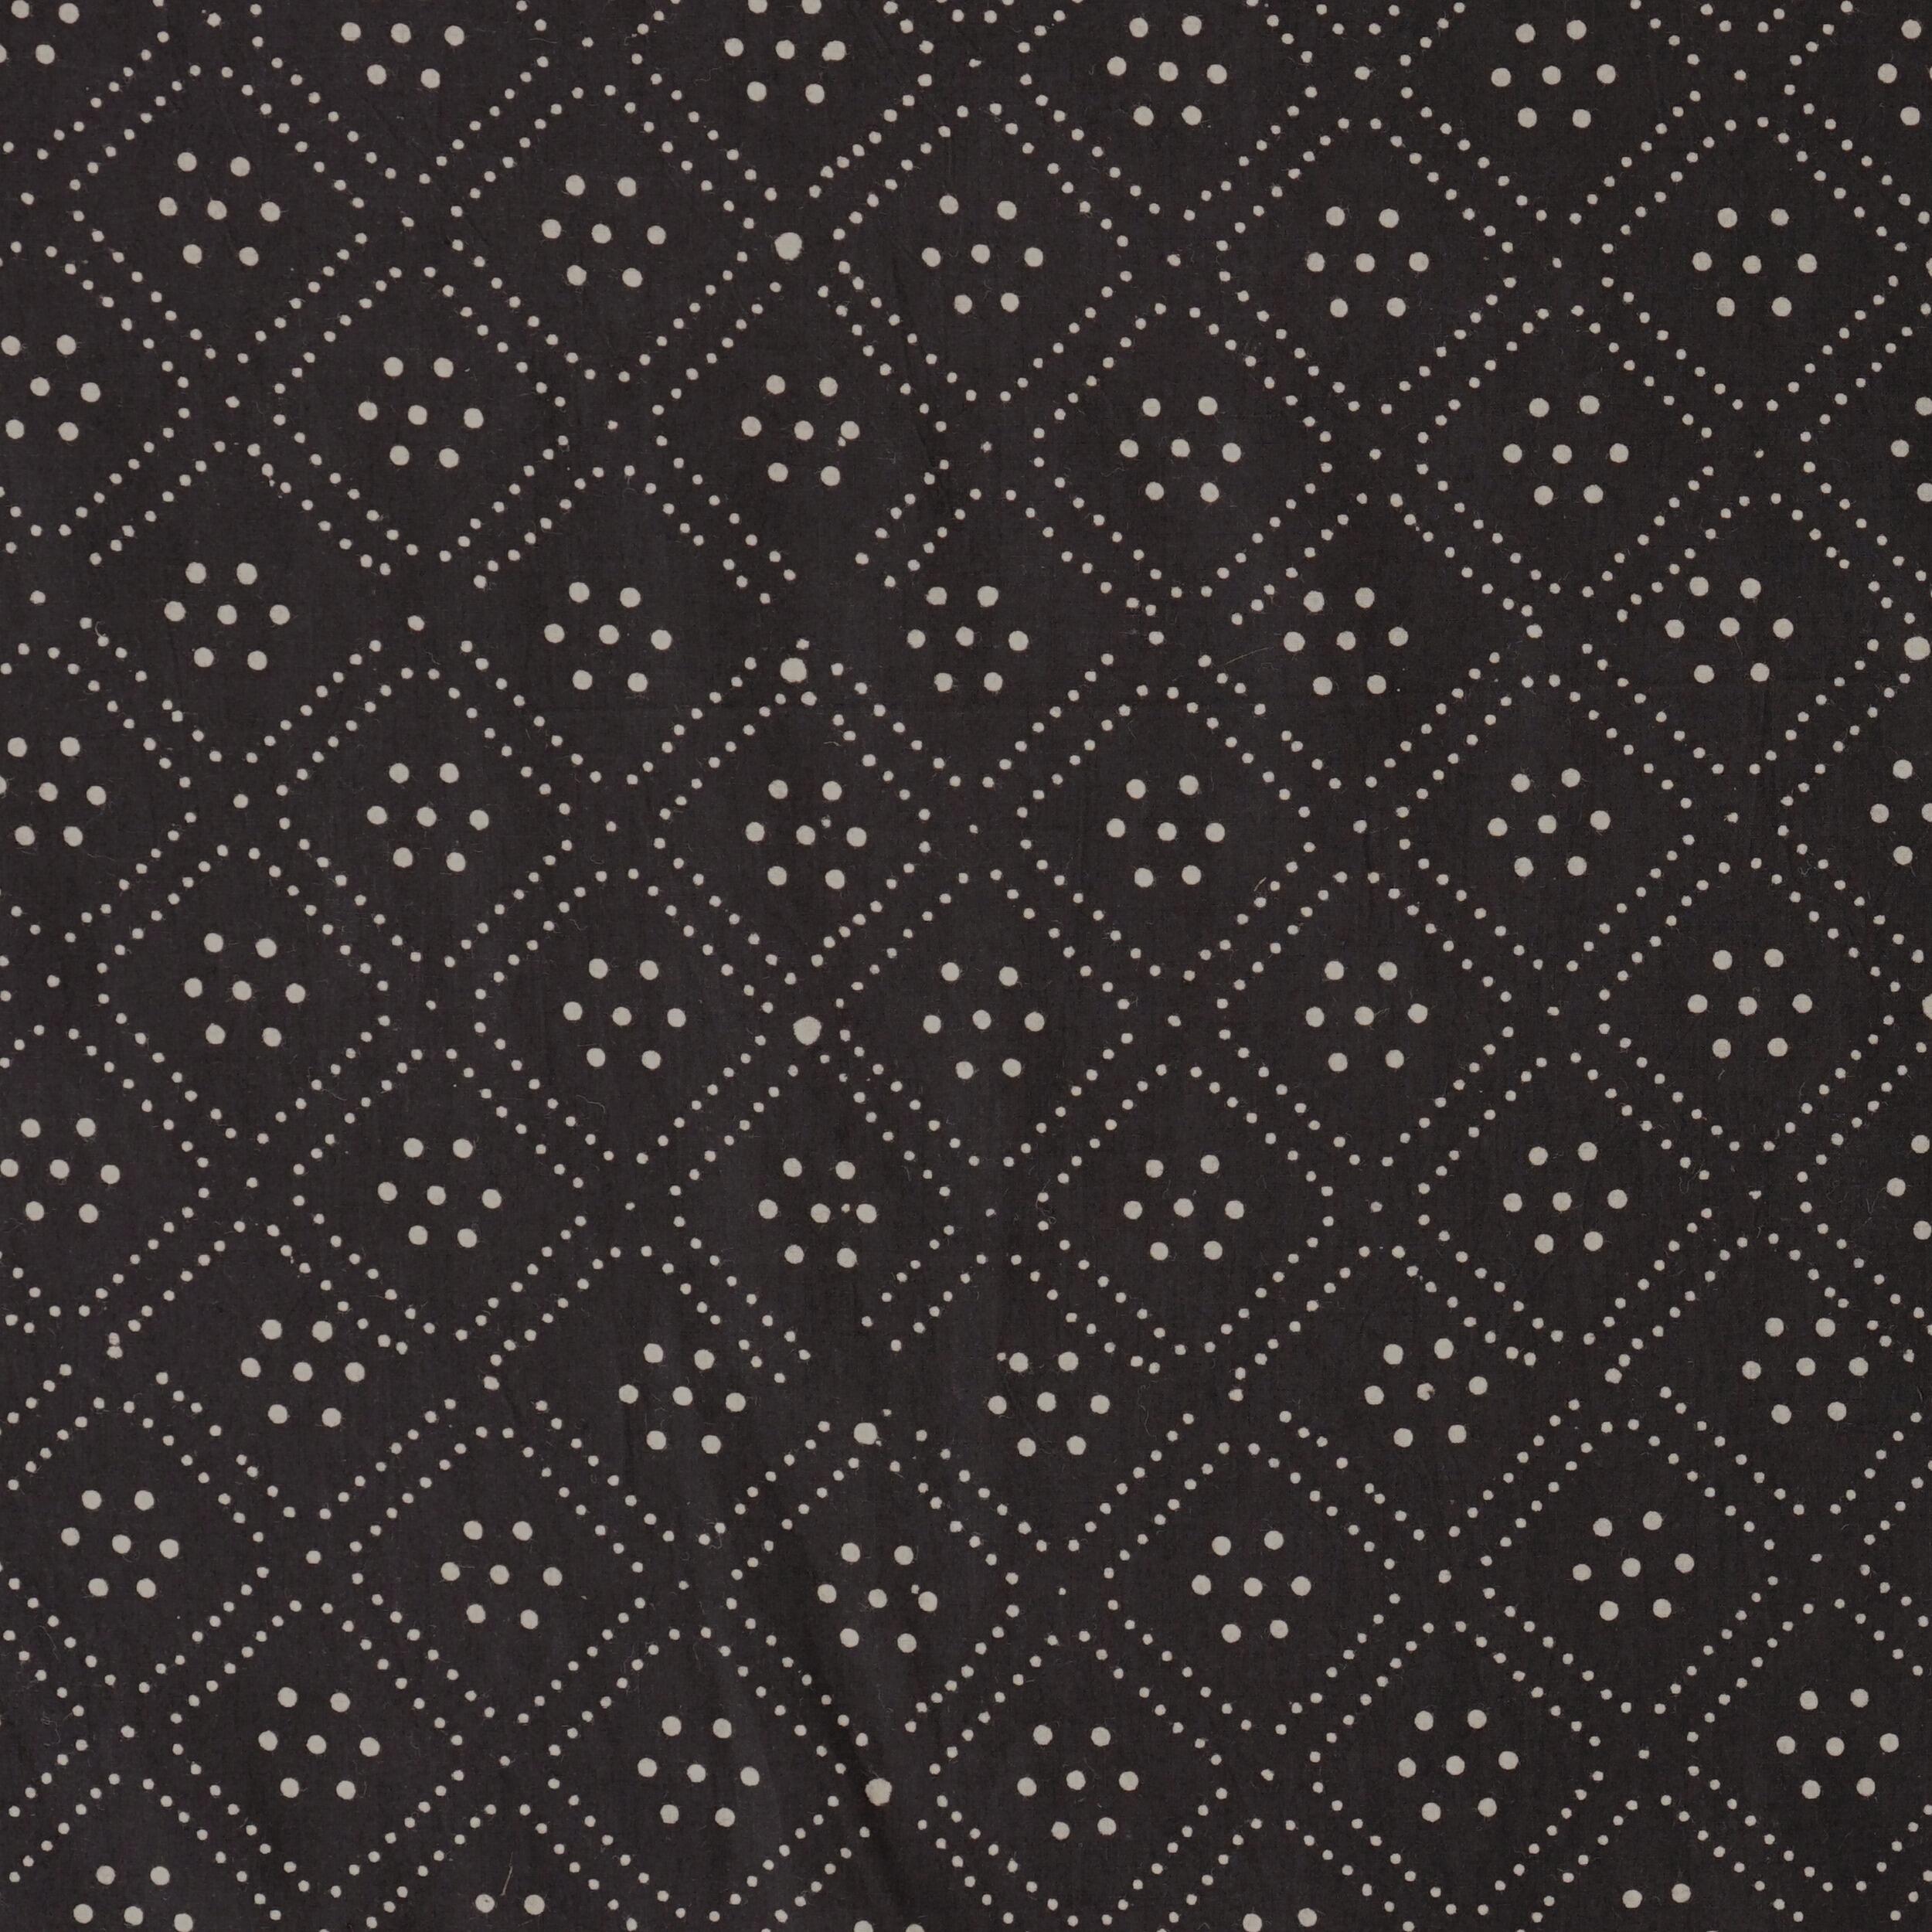 AHM24 - Block Printed Fabric, 100% Cotton, Ajrak Design / Black Diamond Dots. Flat